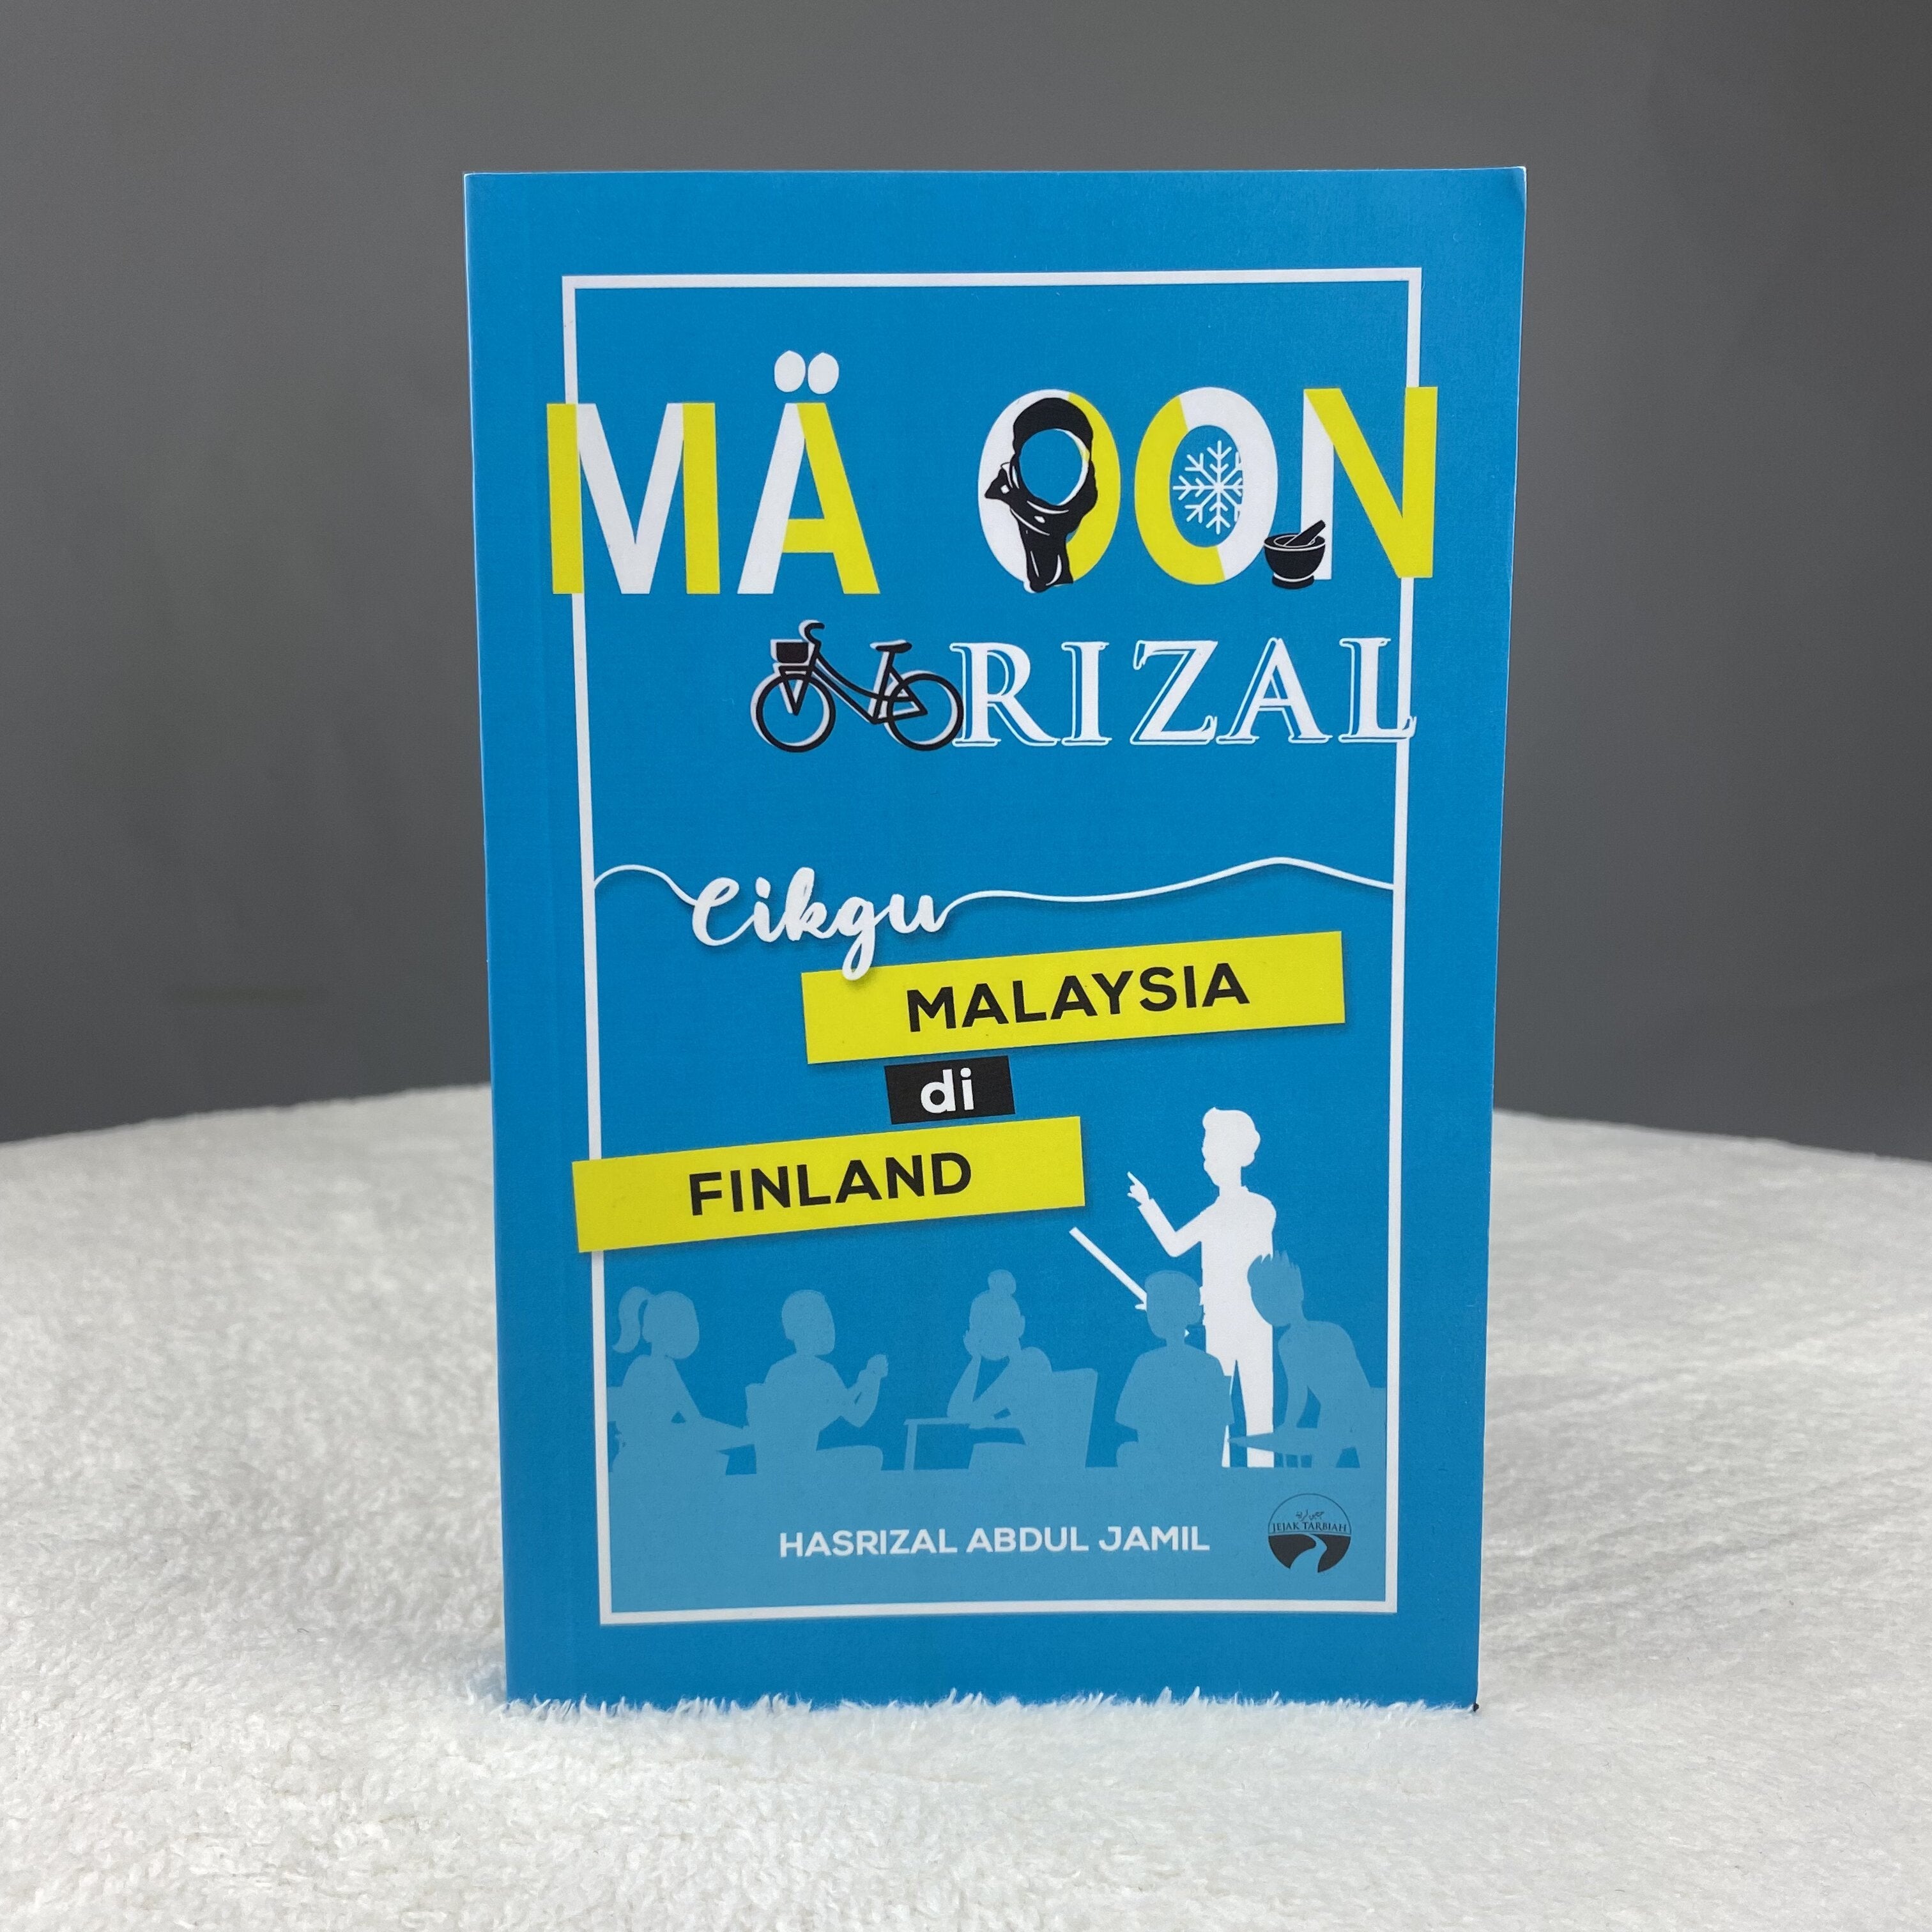 Jejak Tarbiah Buku Mä Oon Rizal (Cikgu Malaysia Di Finland) by Hasrizal Abdul Jamil 202792